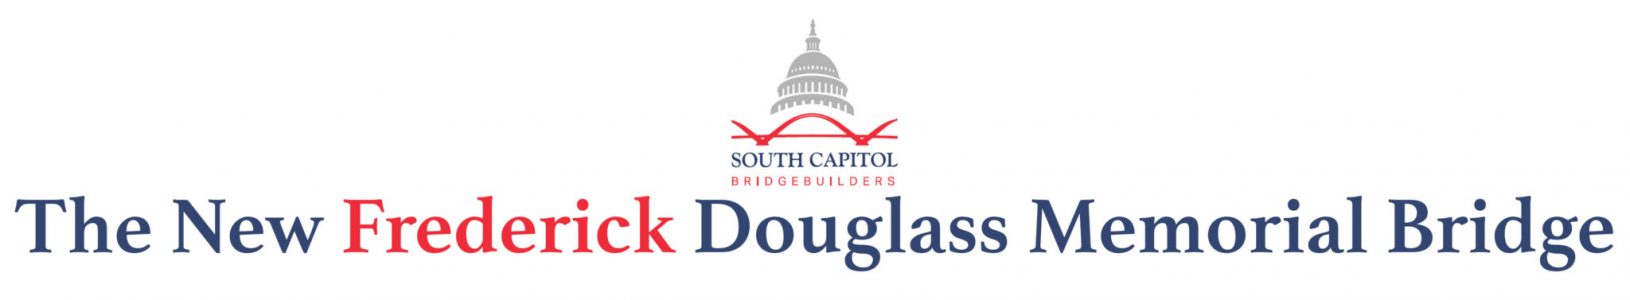 South Capital Bridge Builders